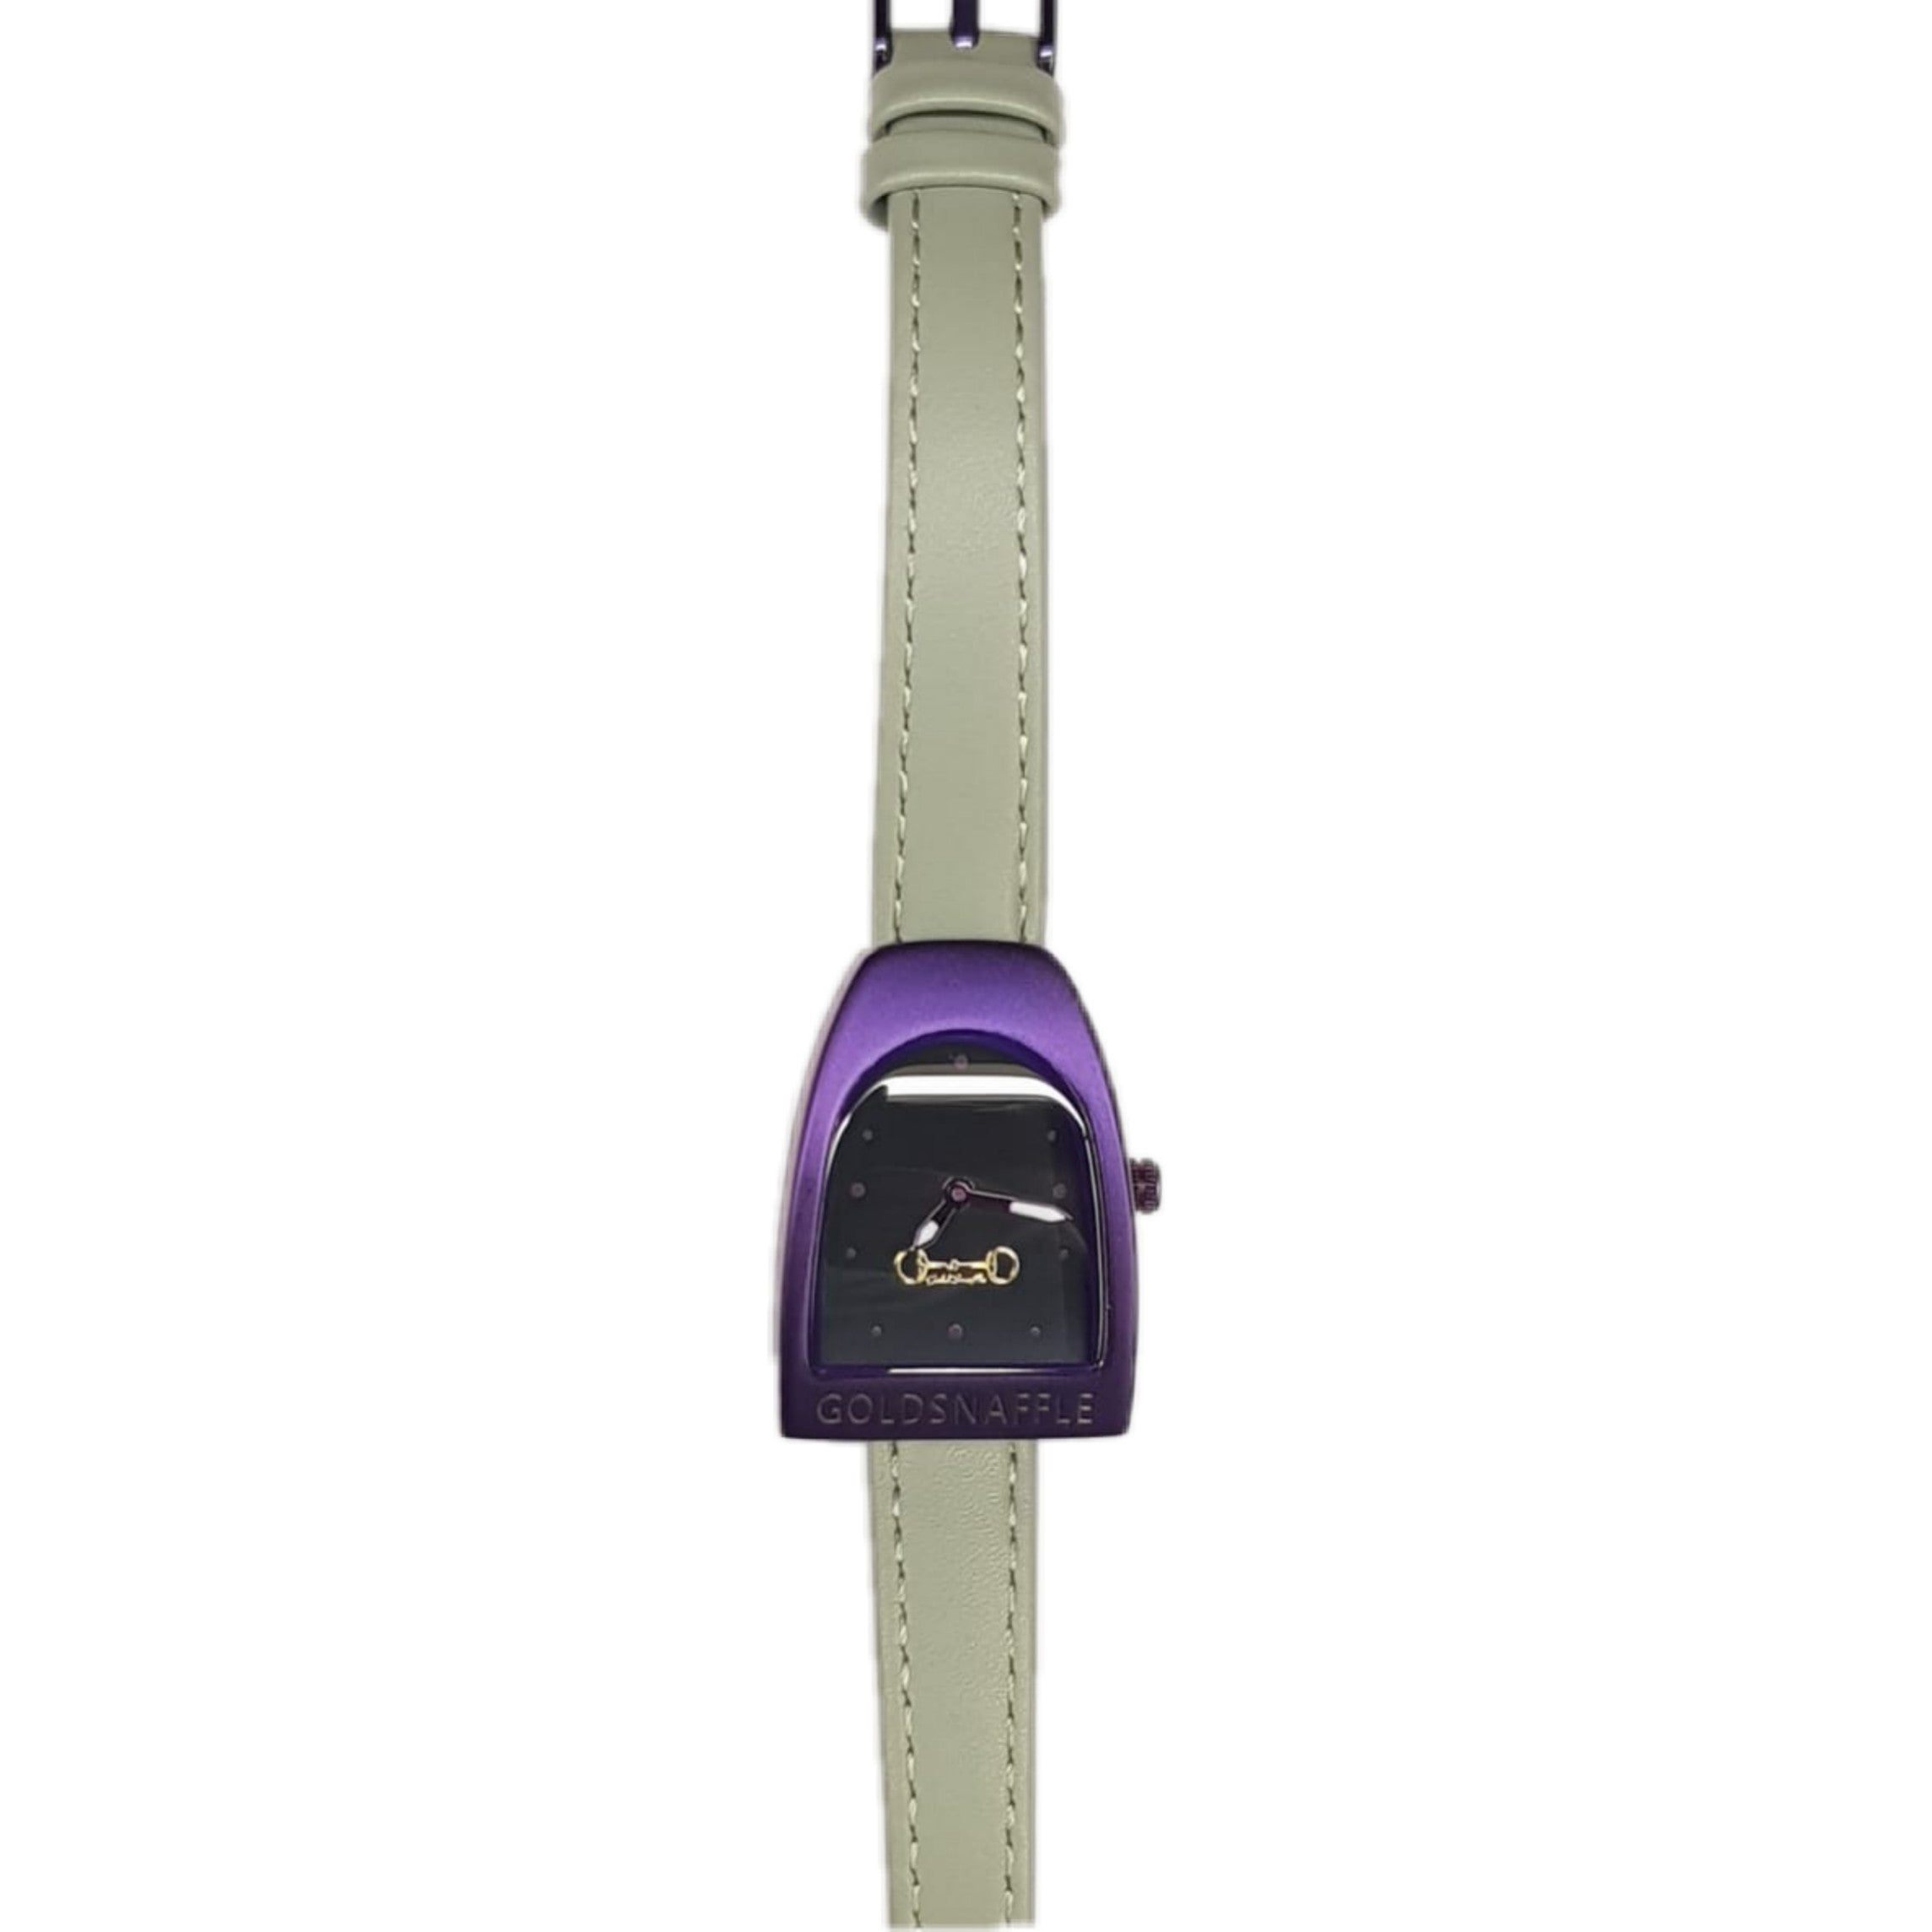 Stunning laser plated stirrup watches - watch - GoldSnaffle